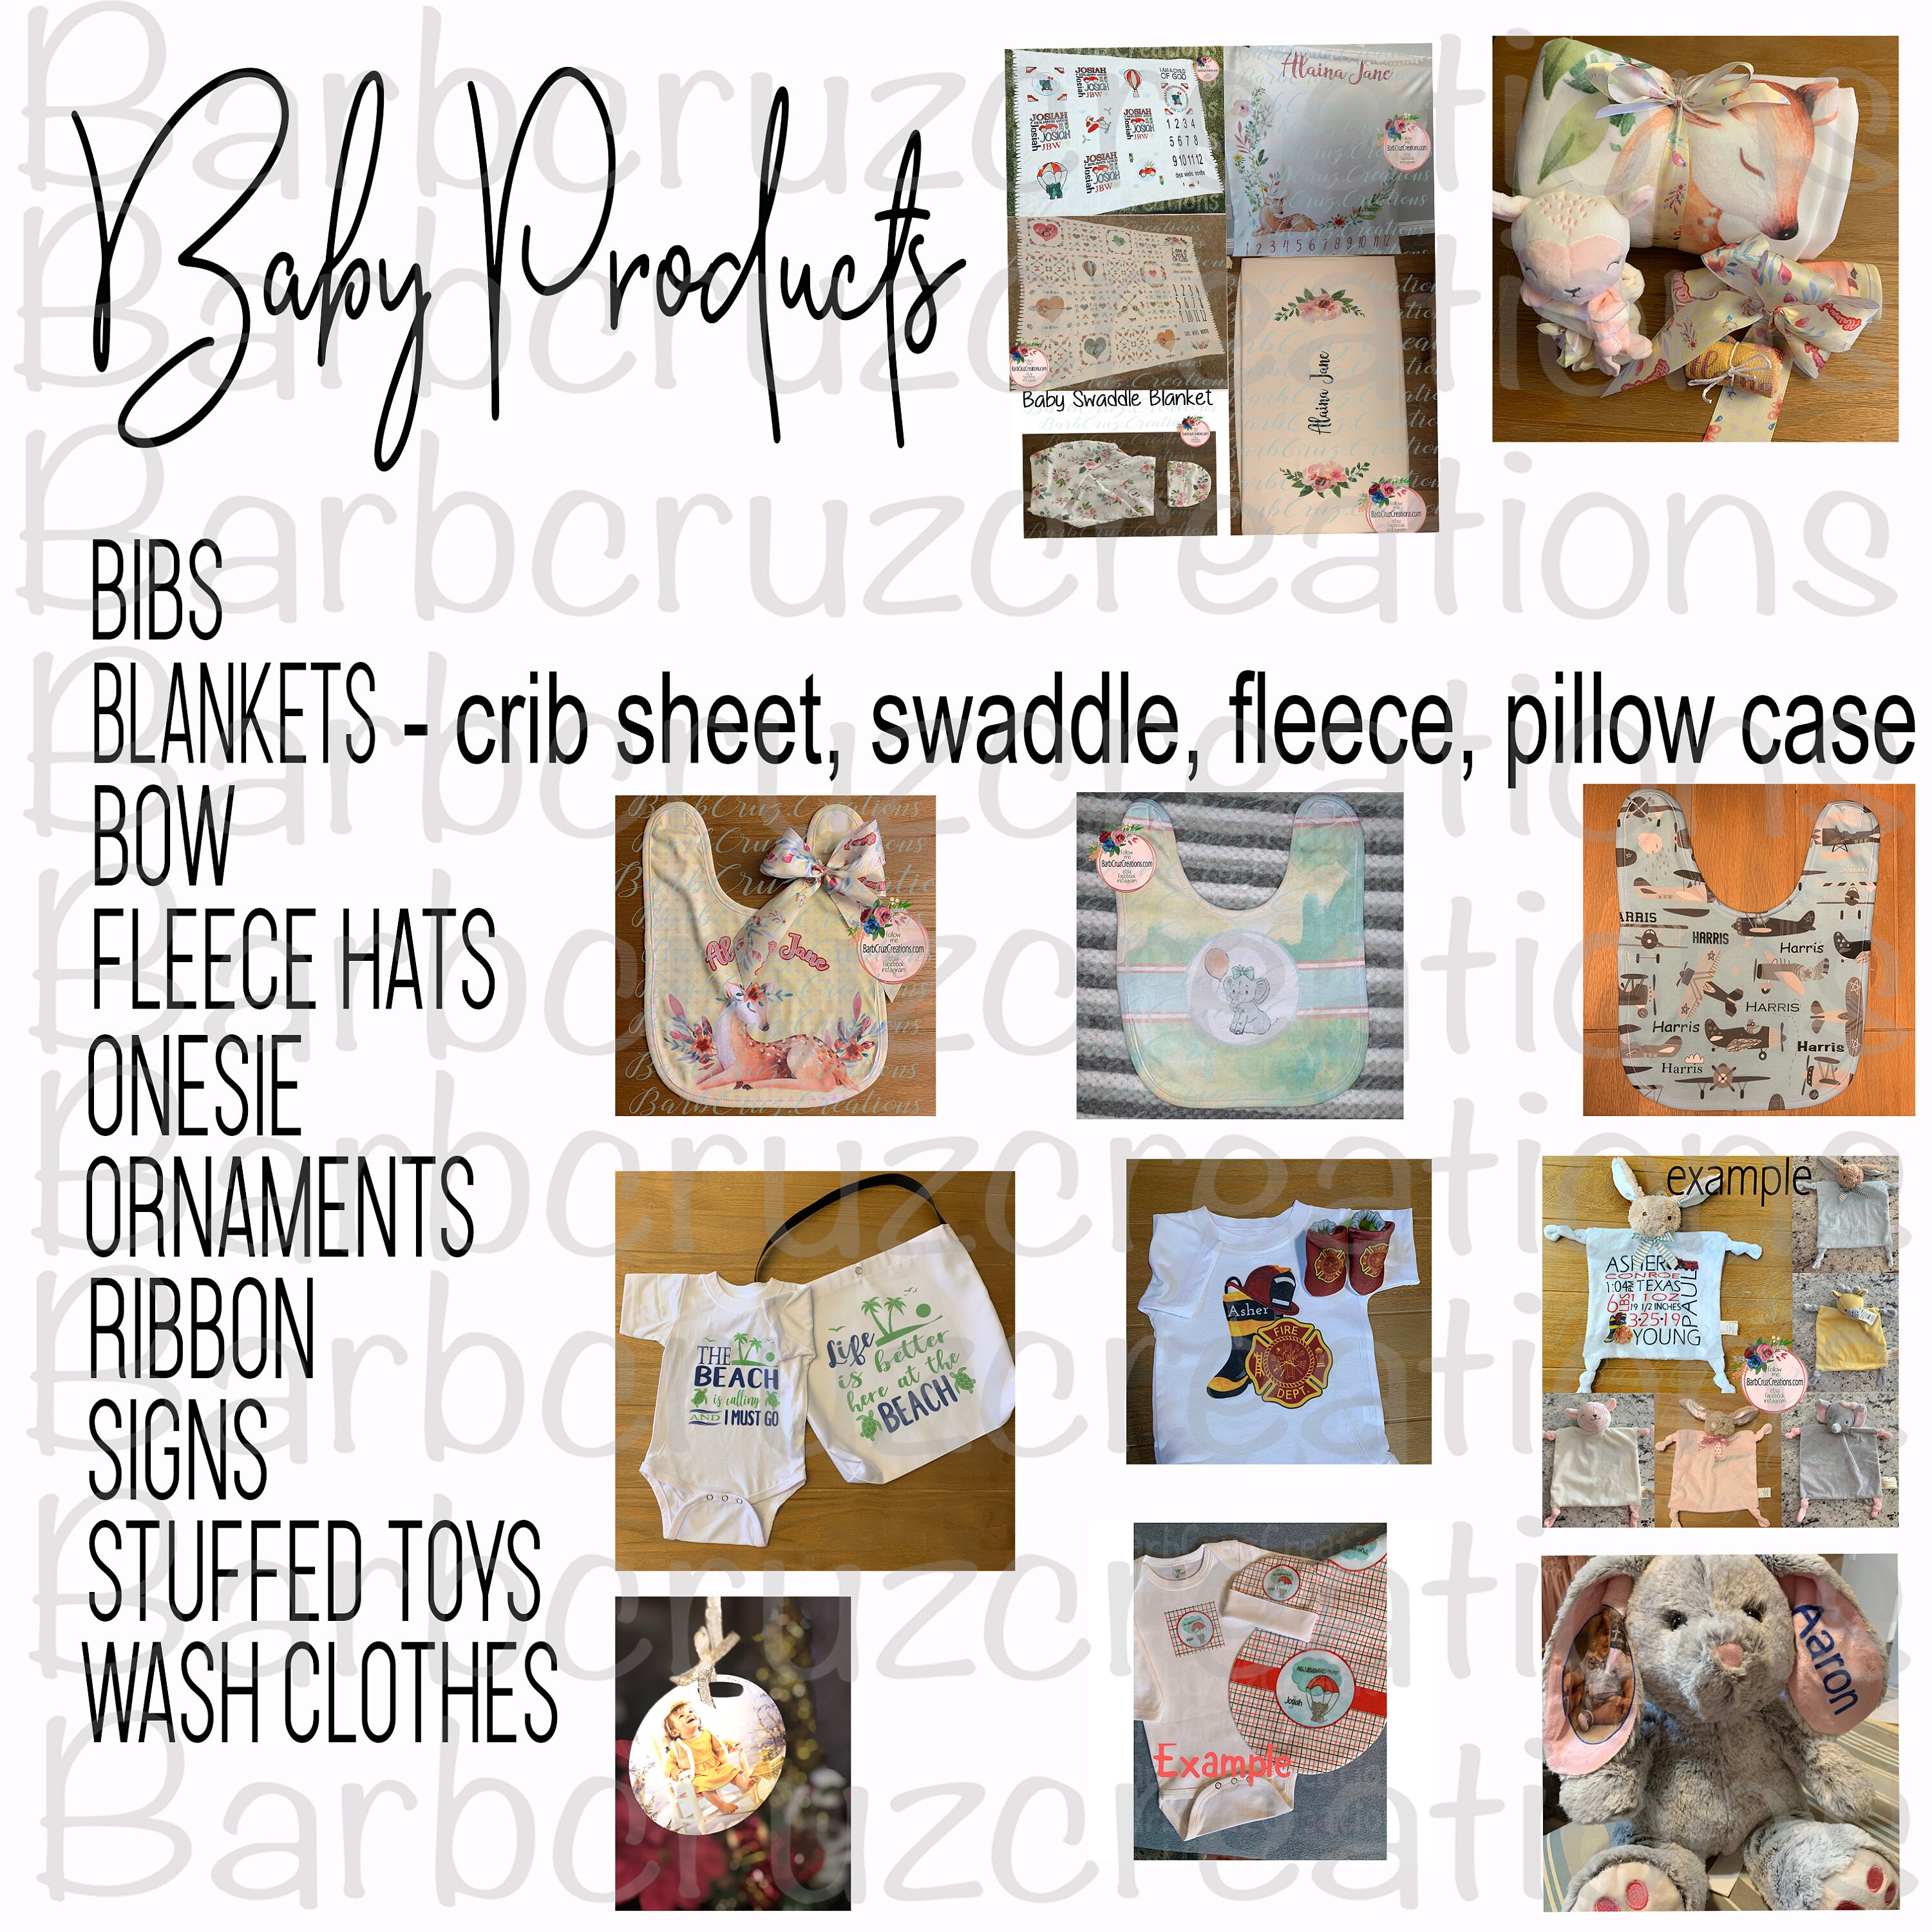 custom baby crib sheets